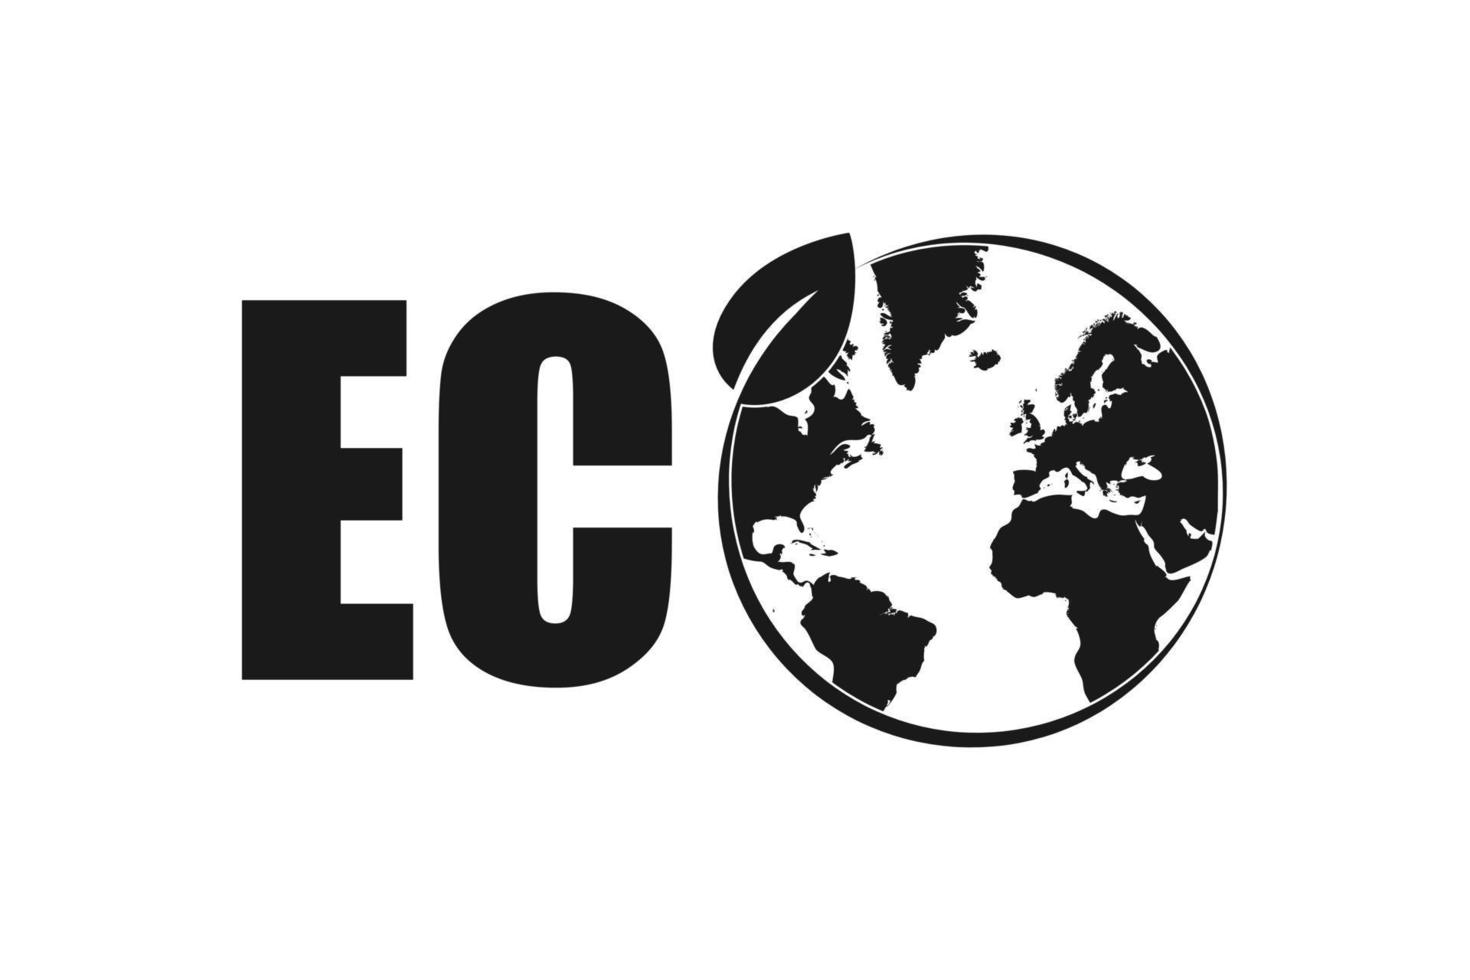 Eco friendly icon with globe vector